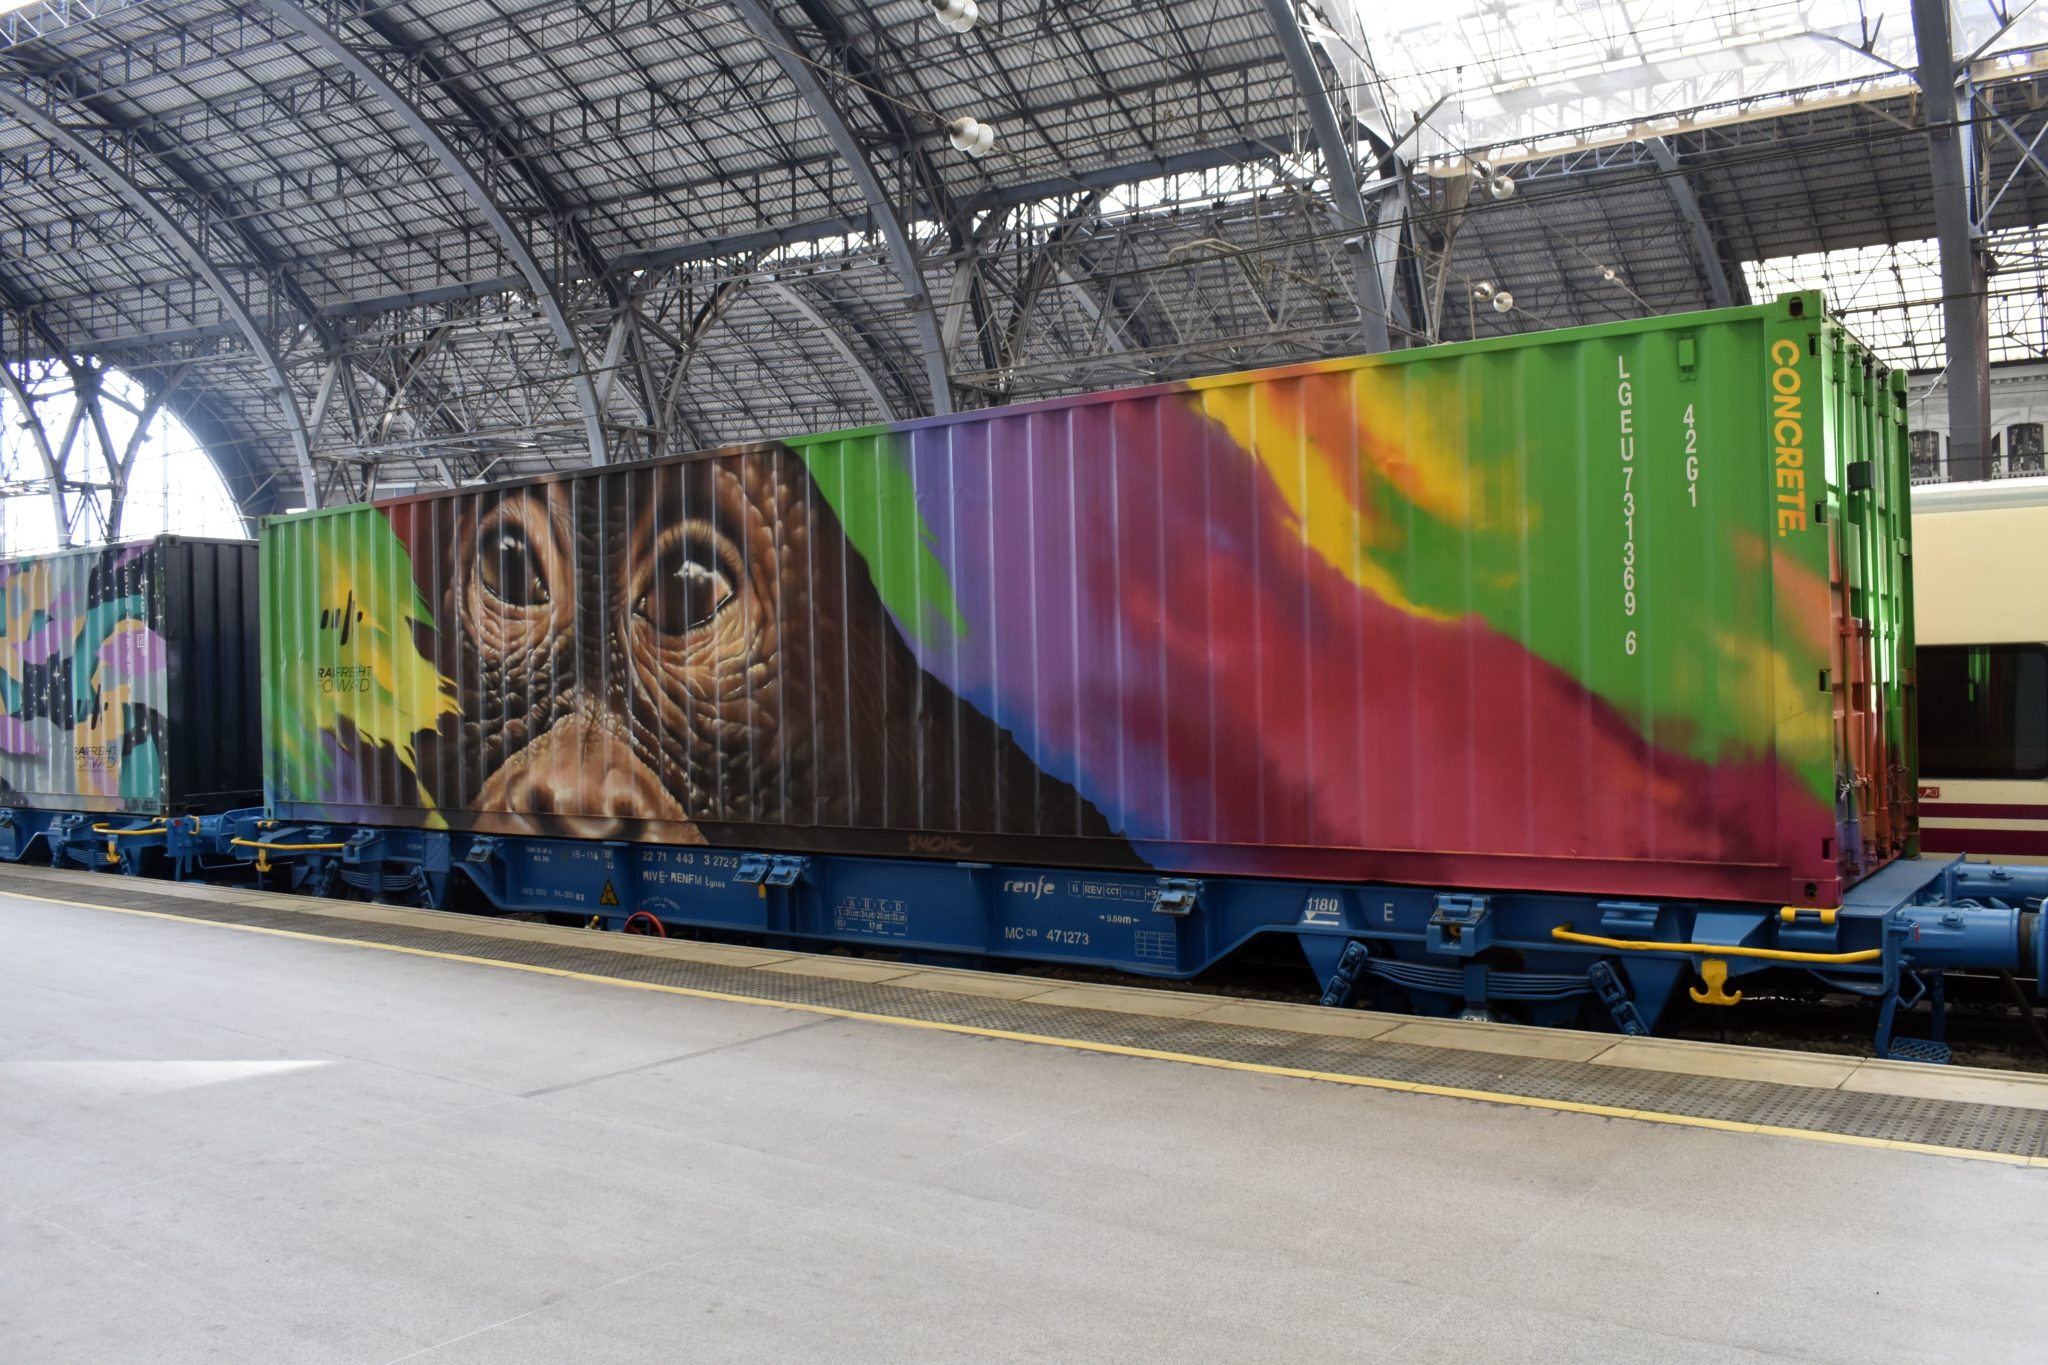 Smok Noah's train street art